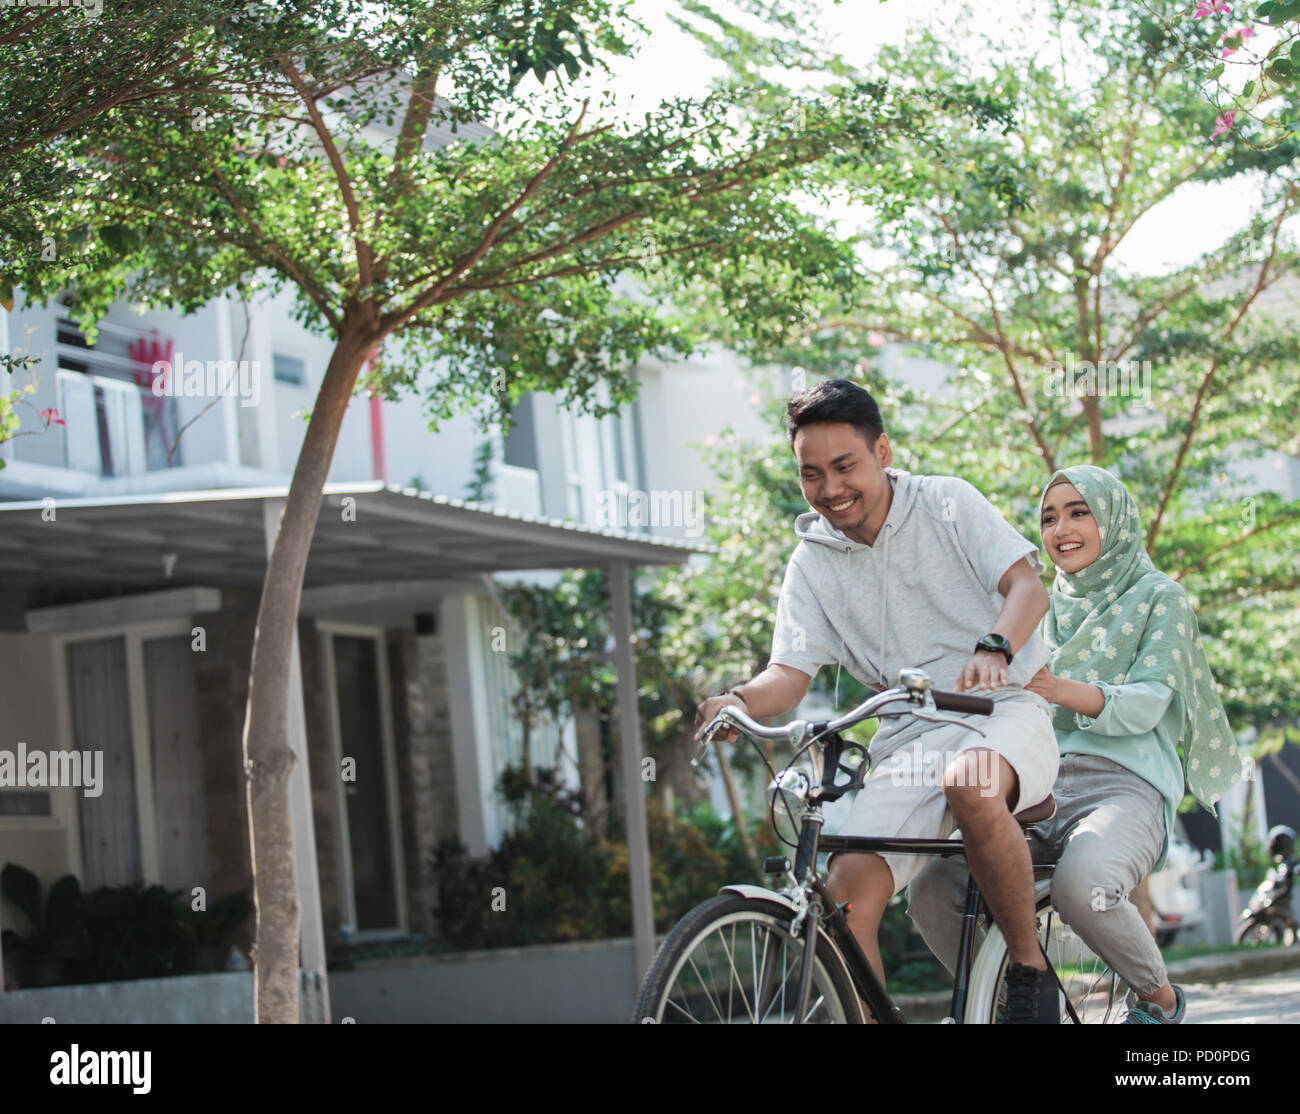 woman and man riding a bike Stock Photo